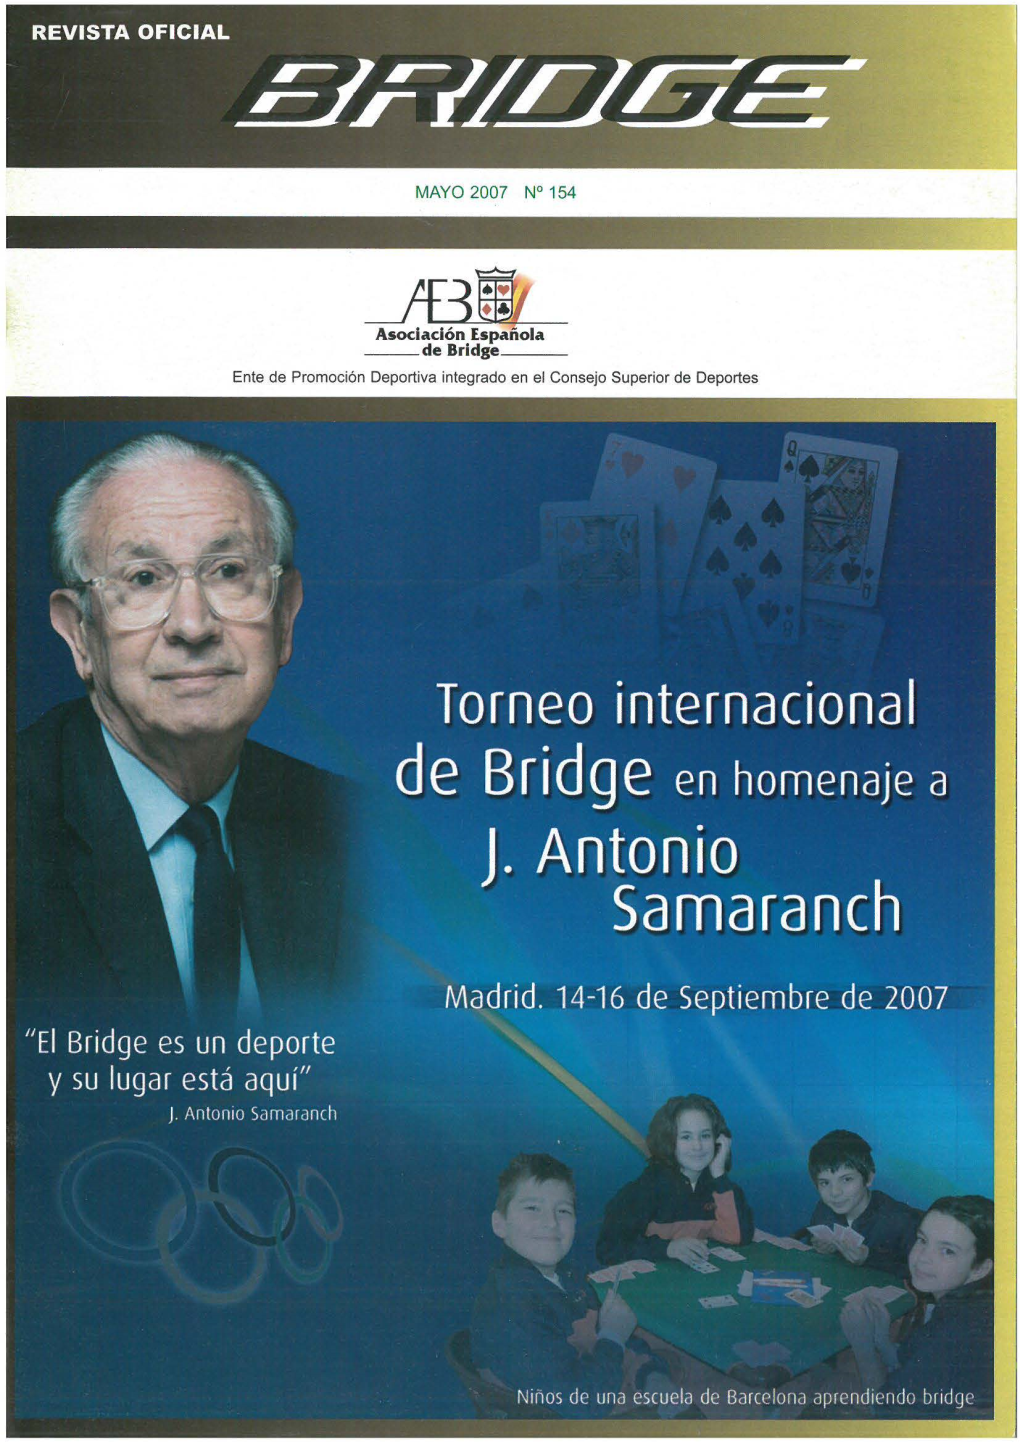 MAYO 2007 N° 154 Asociación Ispanola